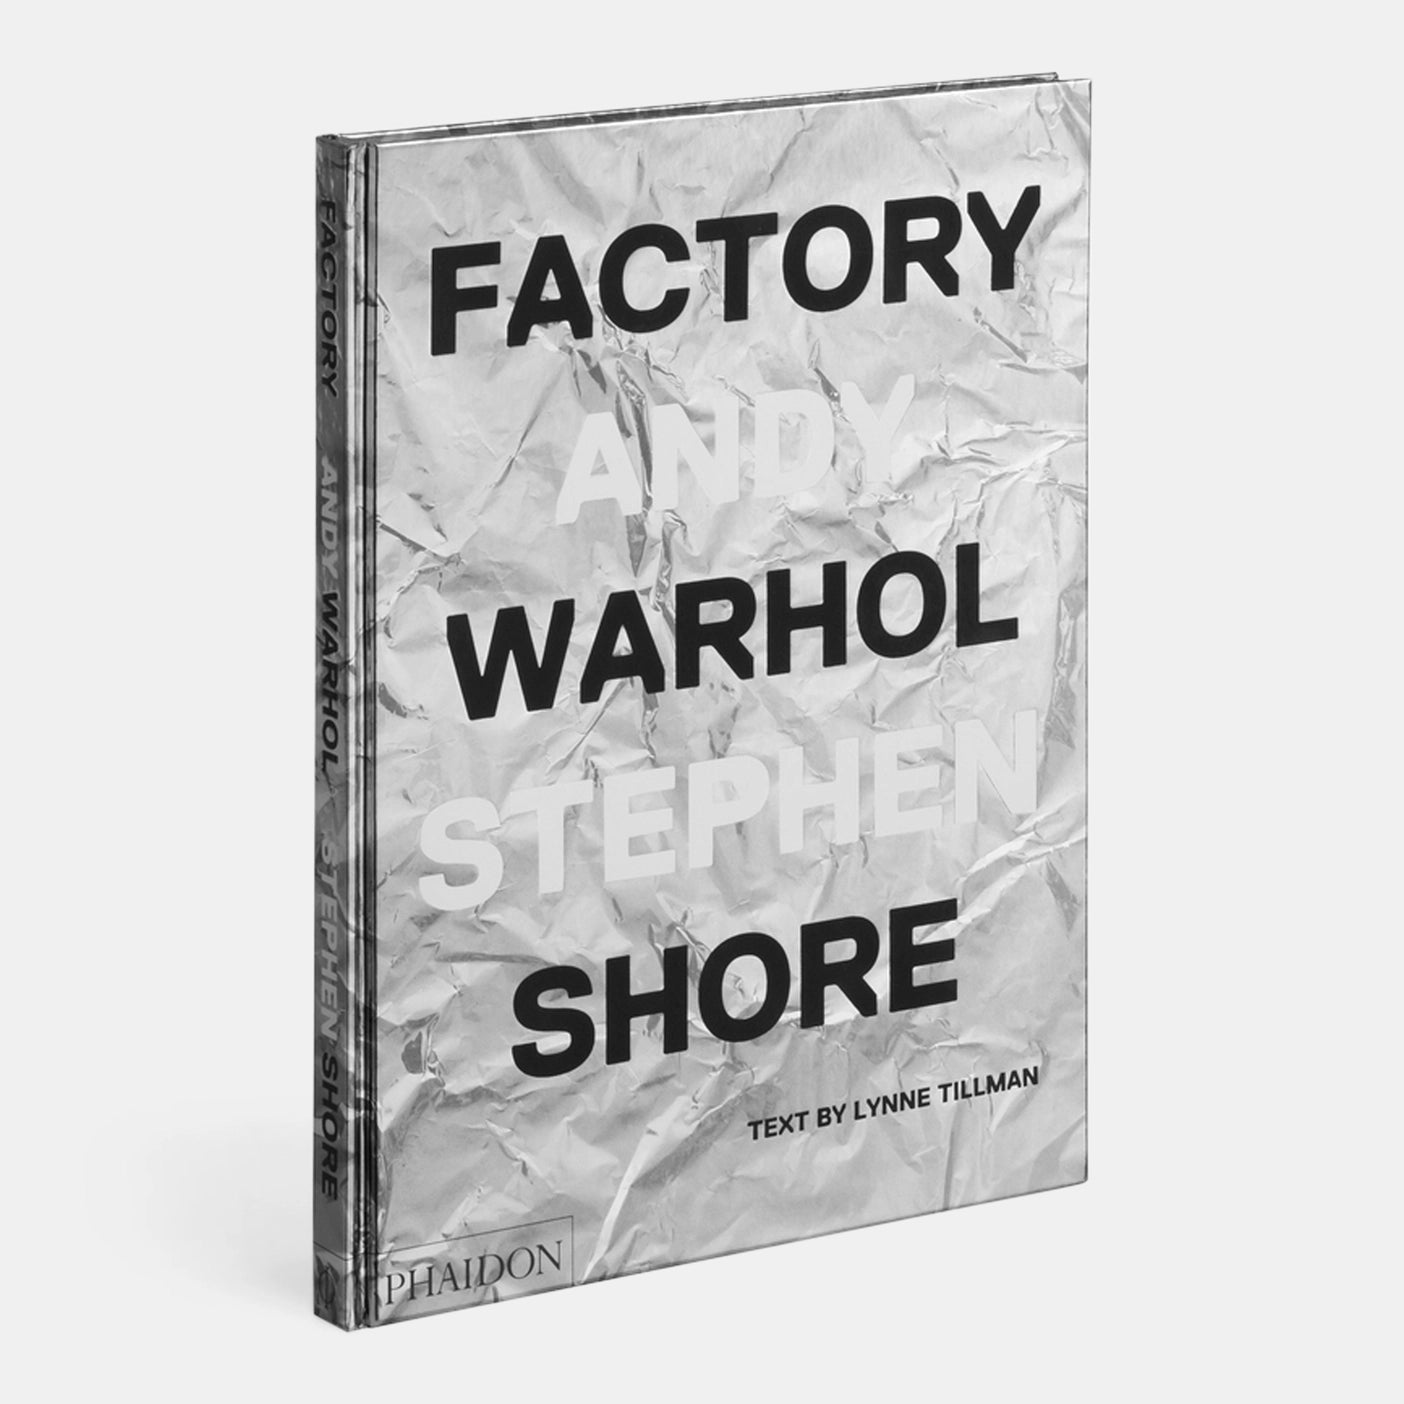 Andy Warhol - 'Factory' Stephen Shore (pre-order)